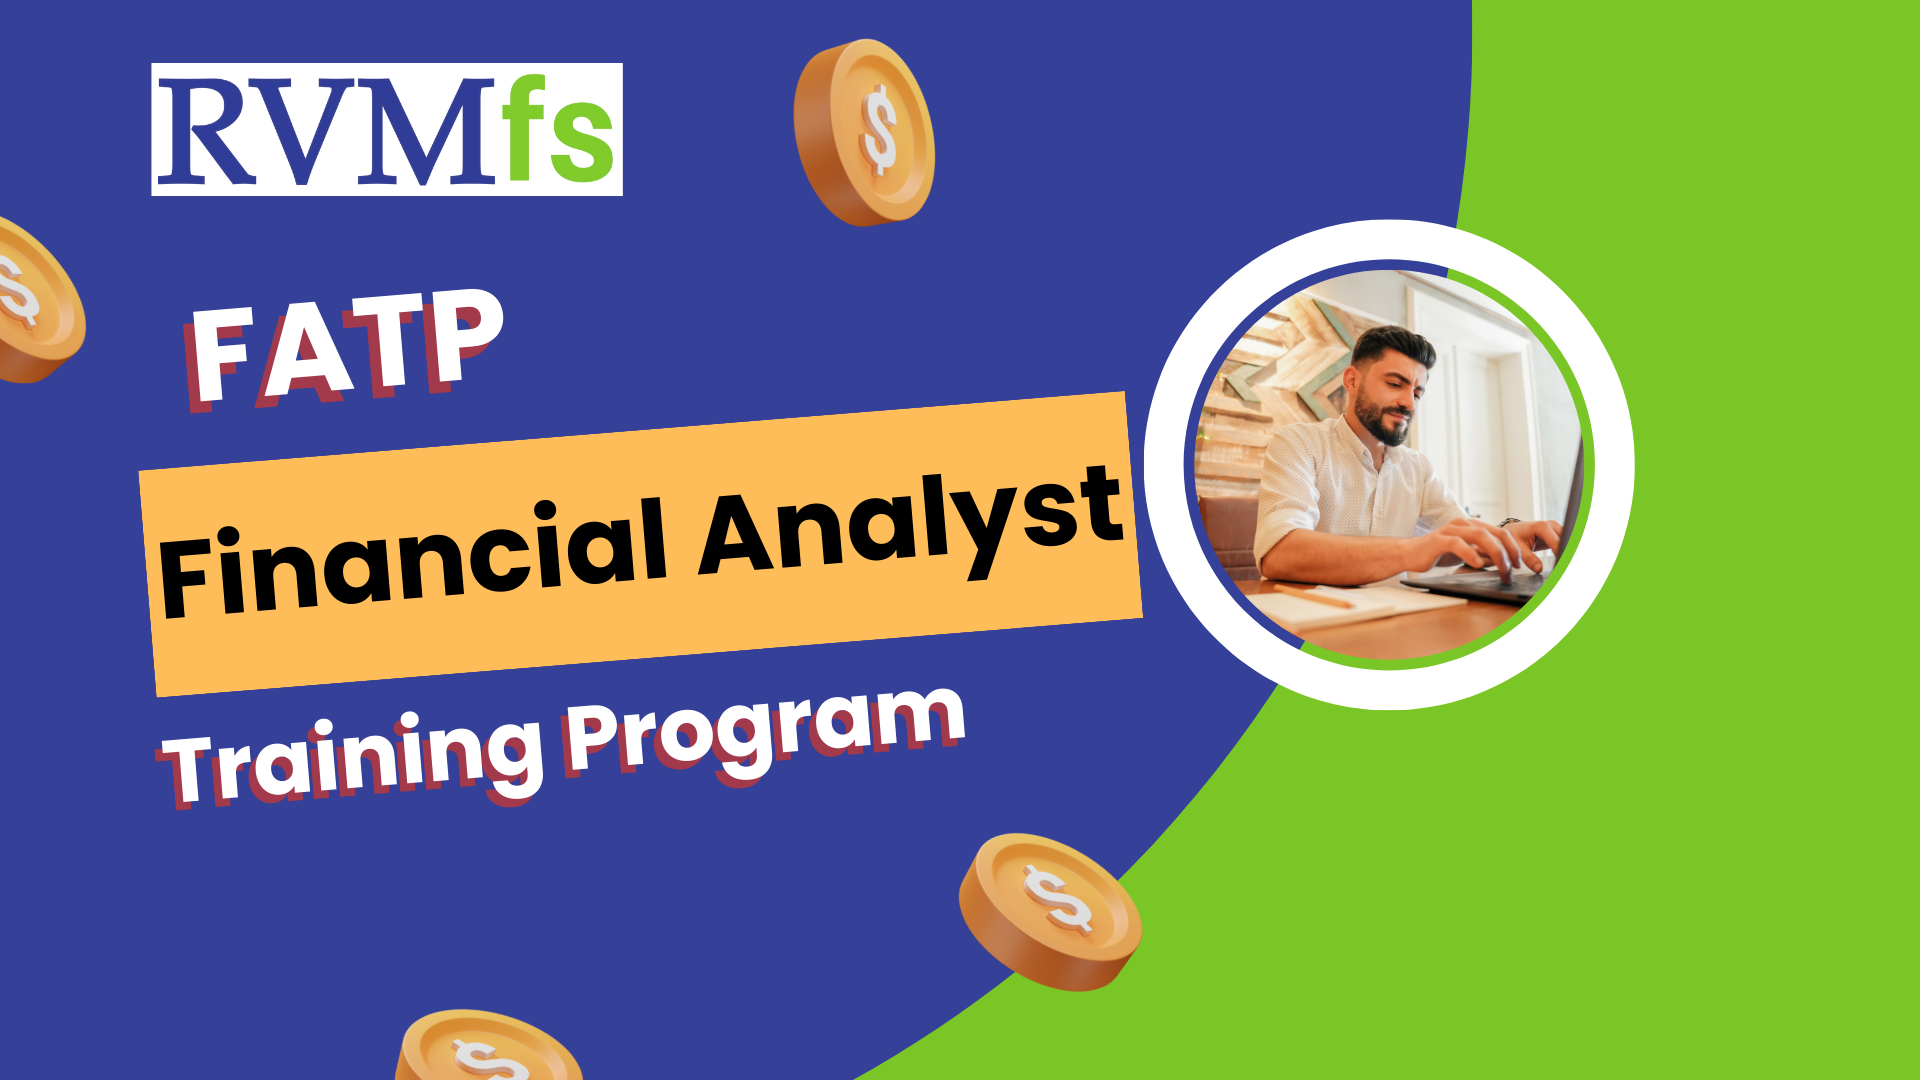 RVMfs FATP (Financial Analyst Training Program)